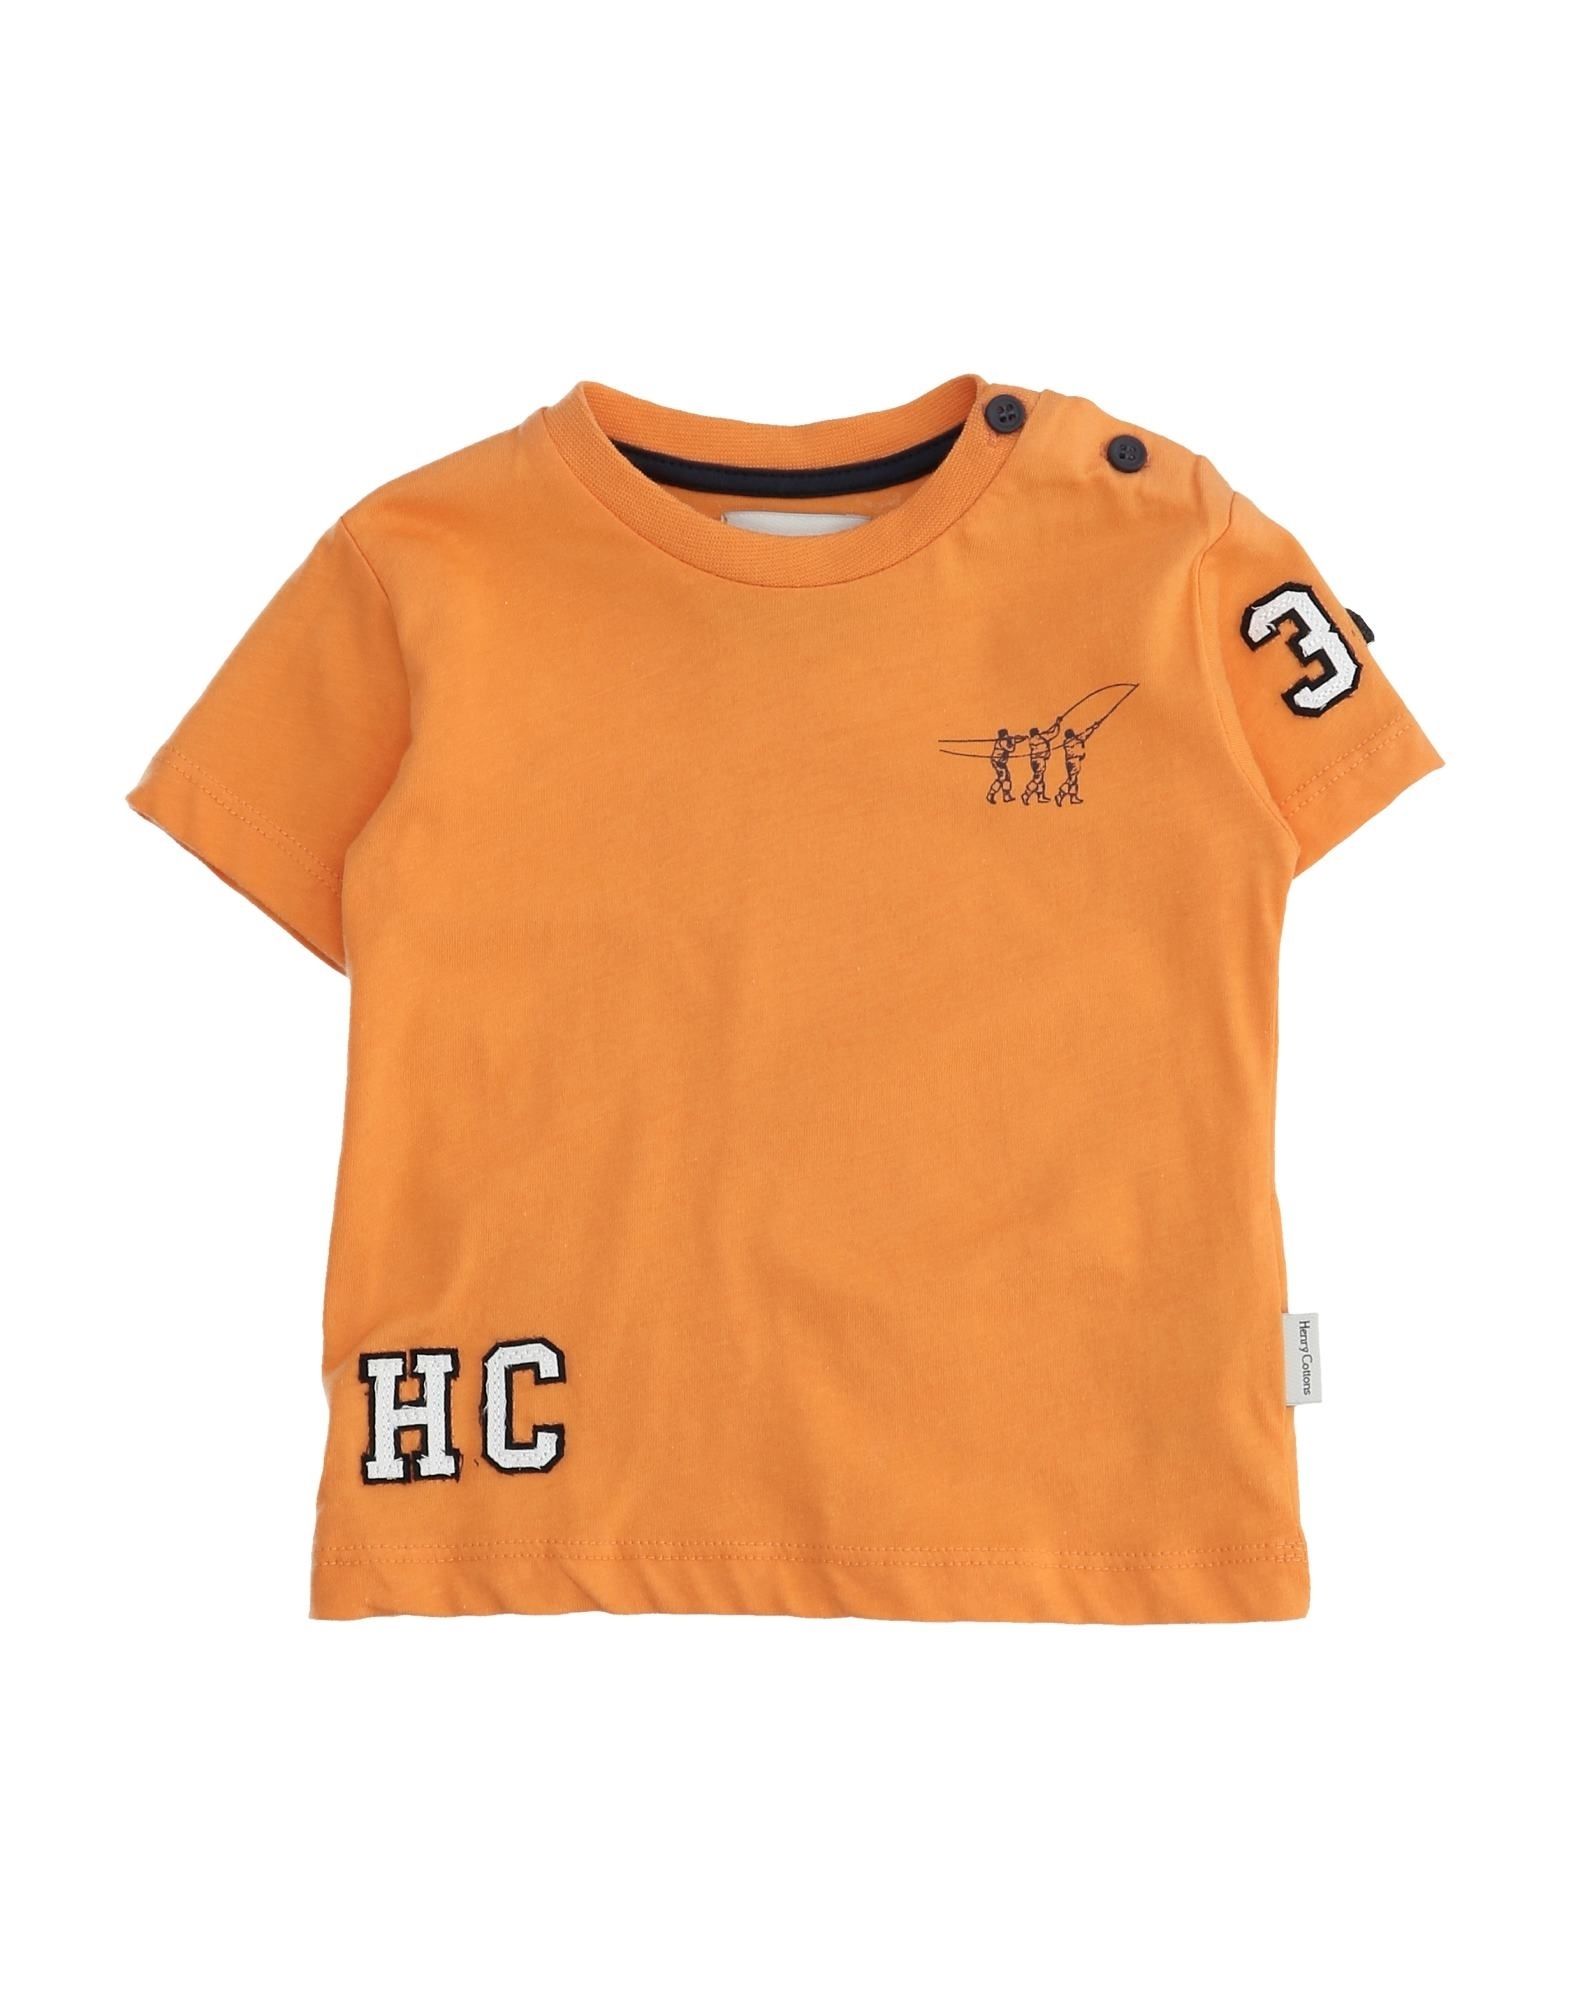 Henry Cotton's Kids' T-shirts In Orange